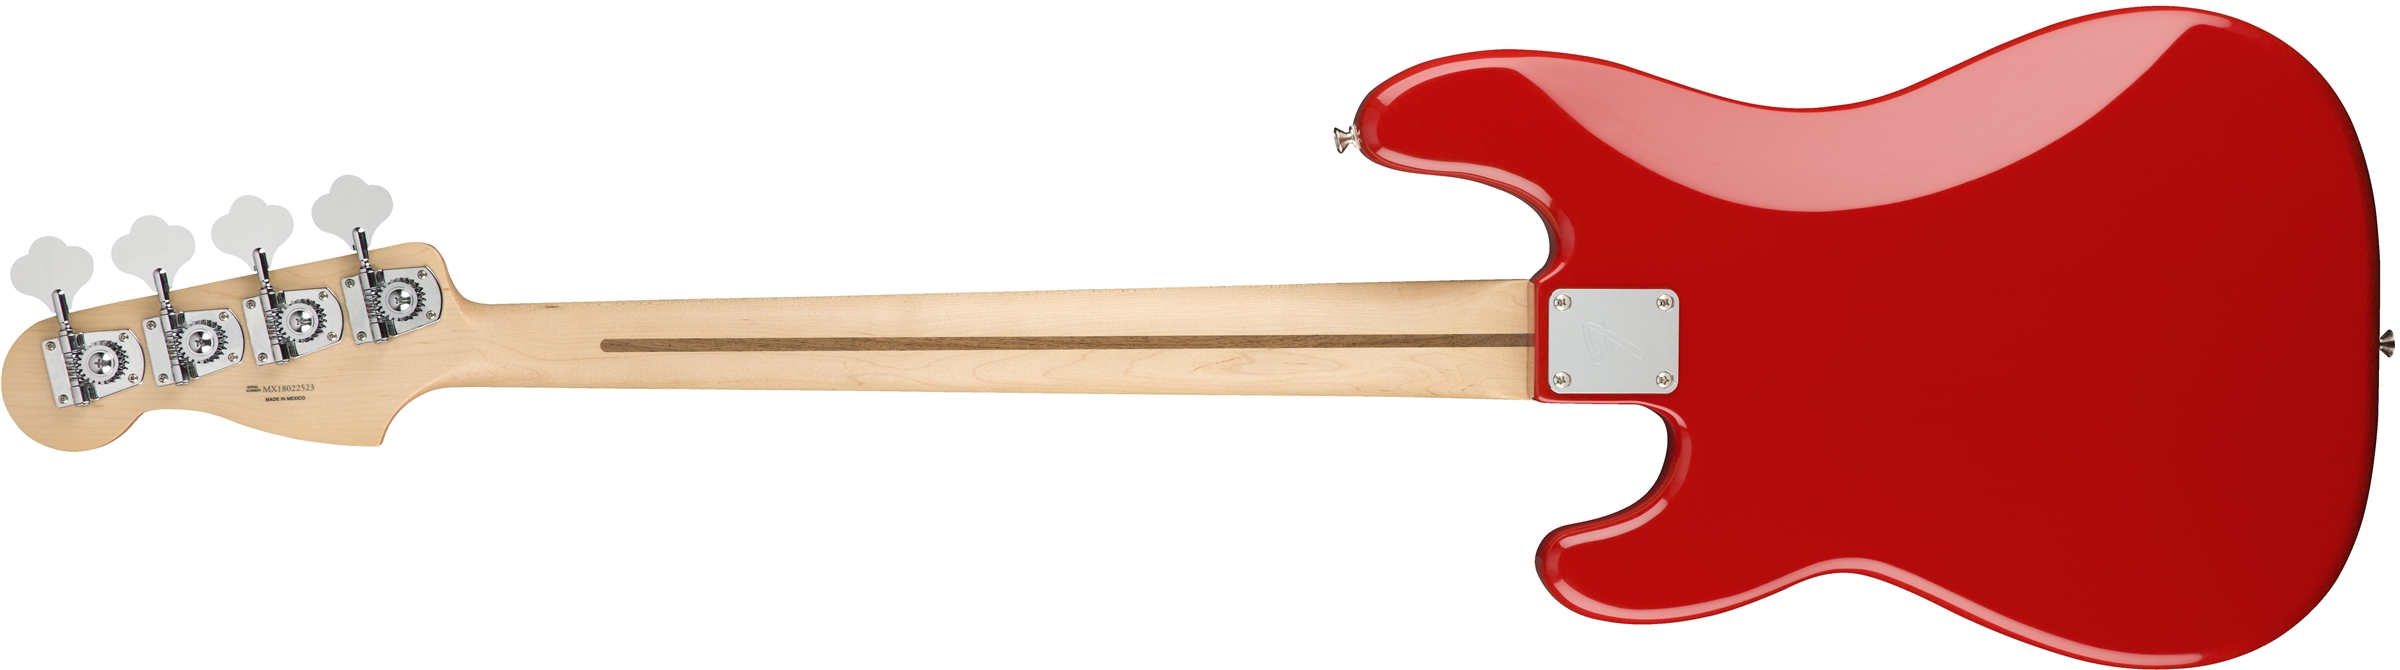 Fender Precision Bass Player Mex Pf - Sonic Red - Solid body elektrische bas - Variation 1